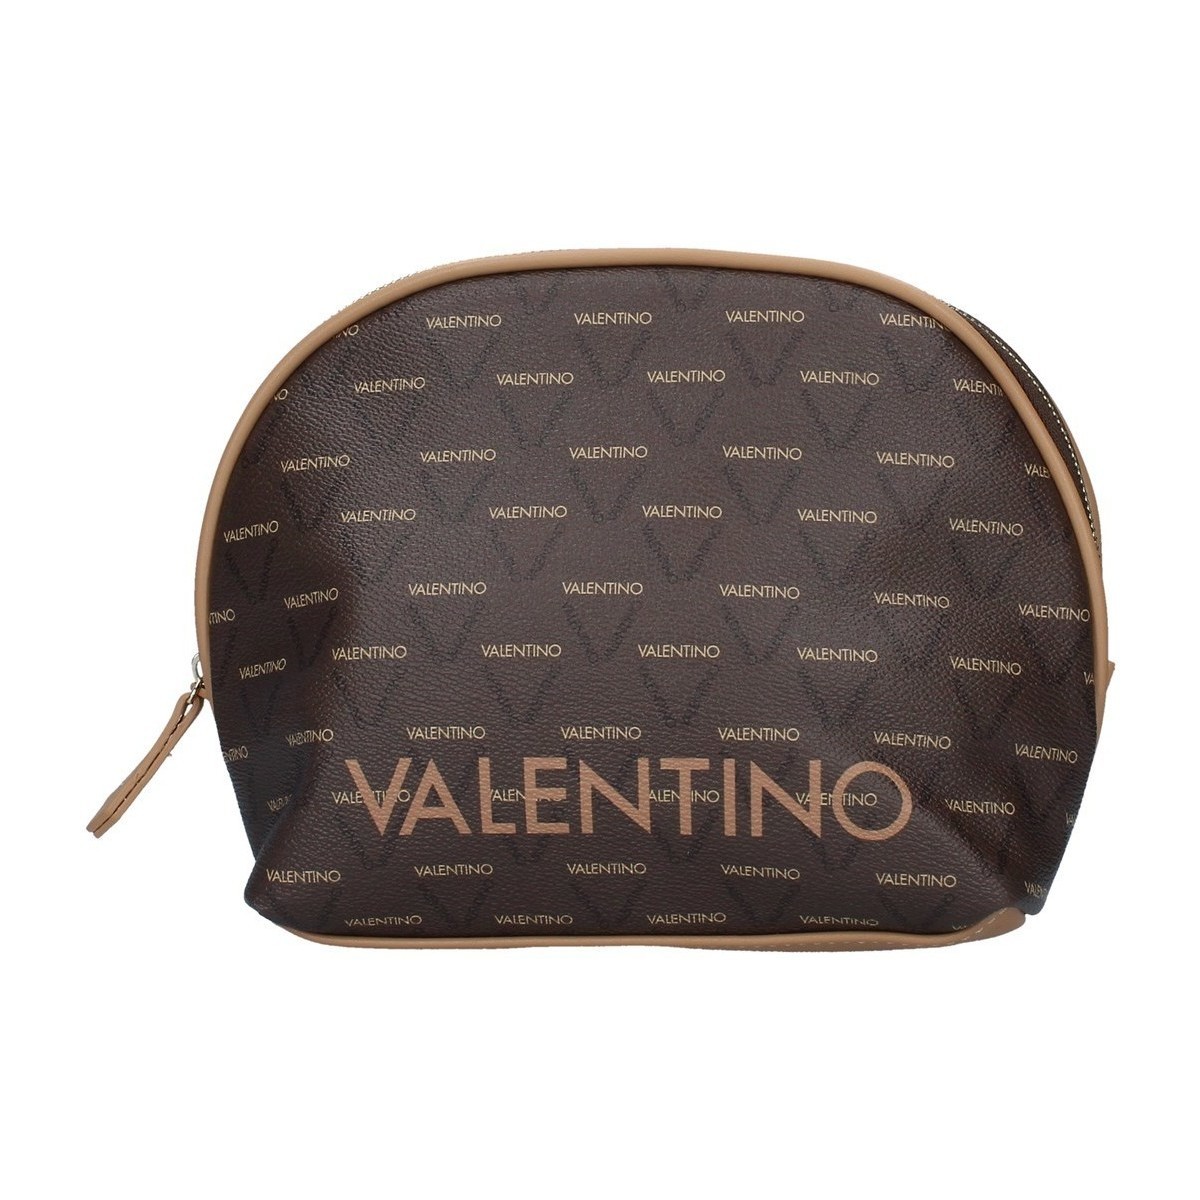 Tassen Tasjes / Handtasjes Valentino Bags VBE3KG533 Brown